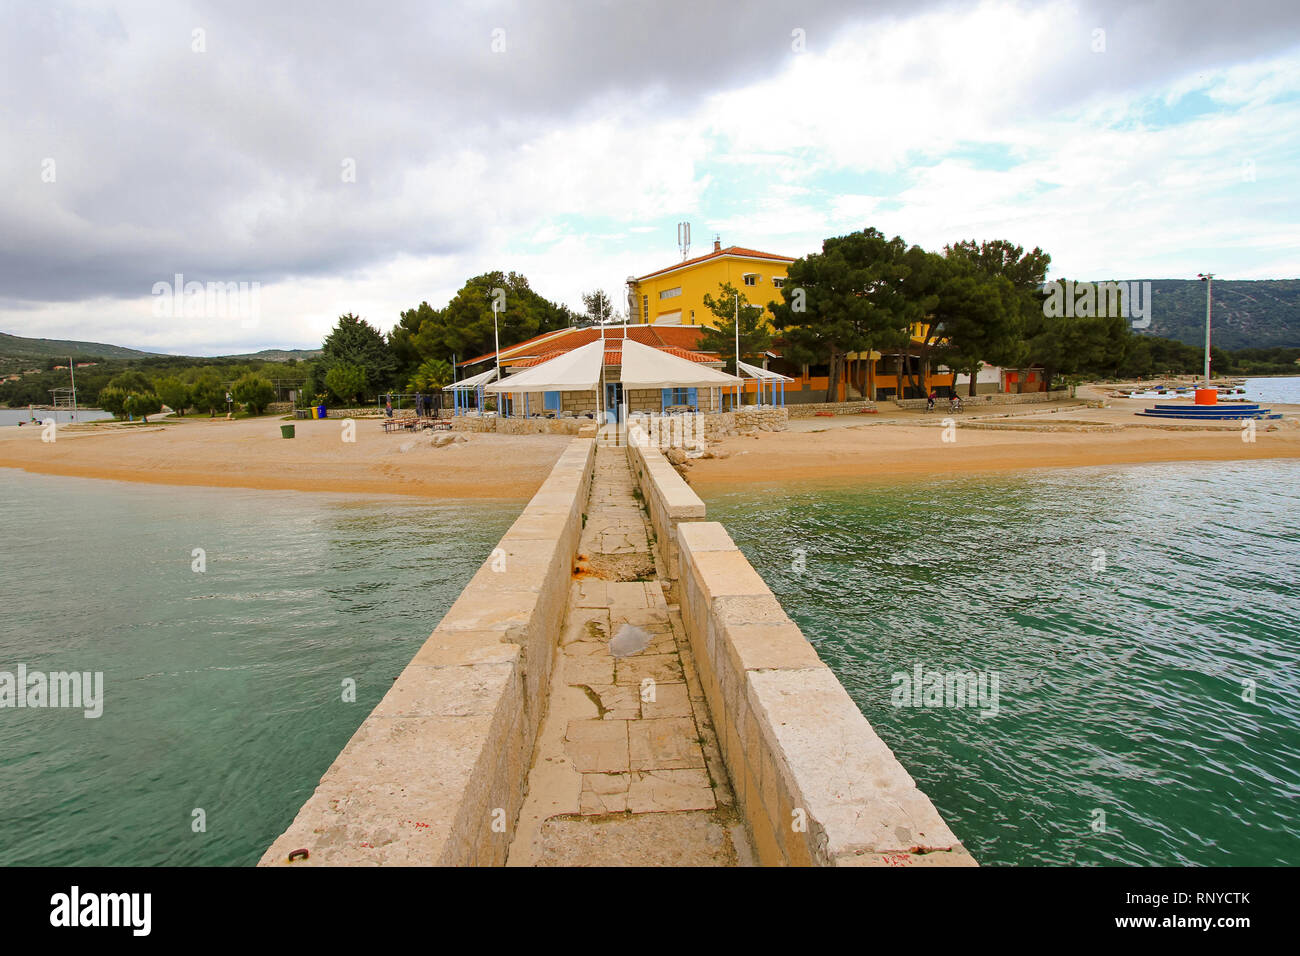 Camping Kovacine at island Cres in Croatia Stock Photo - Alamy